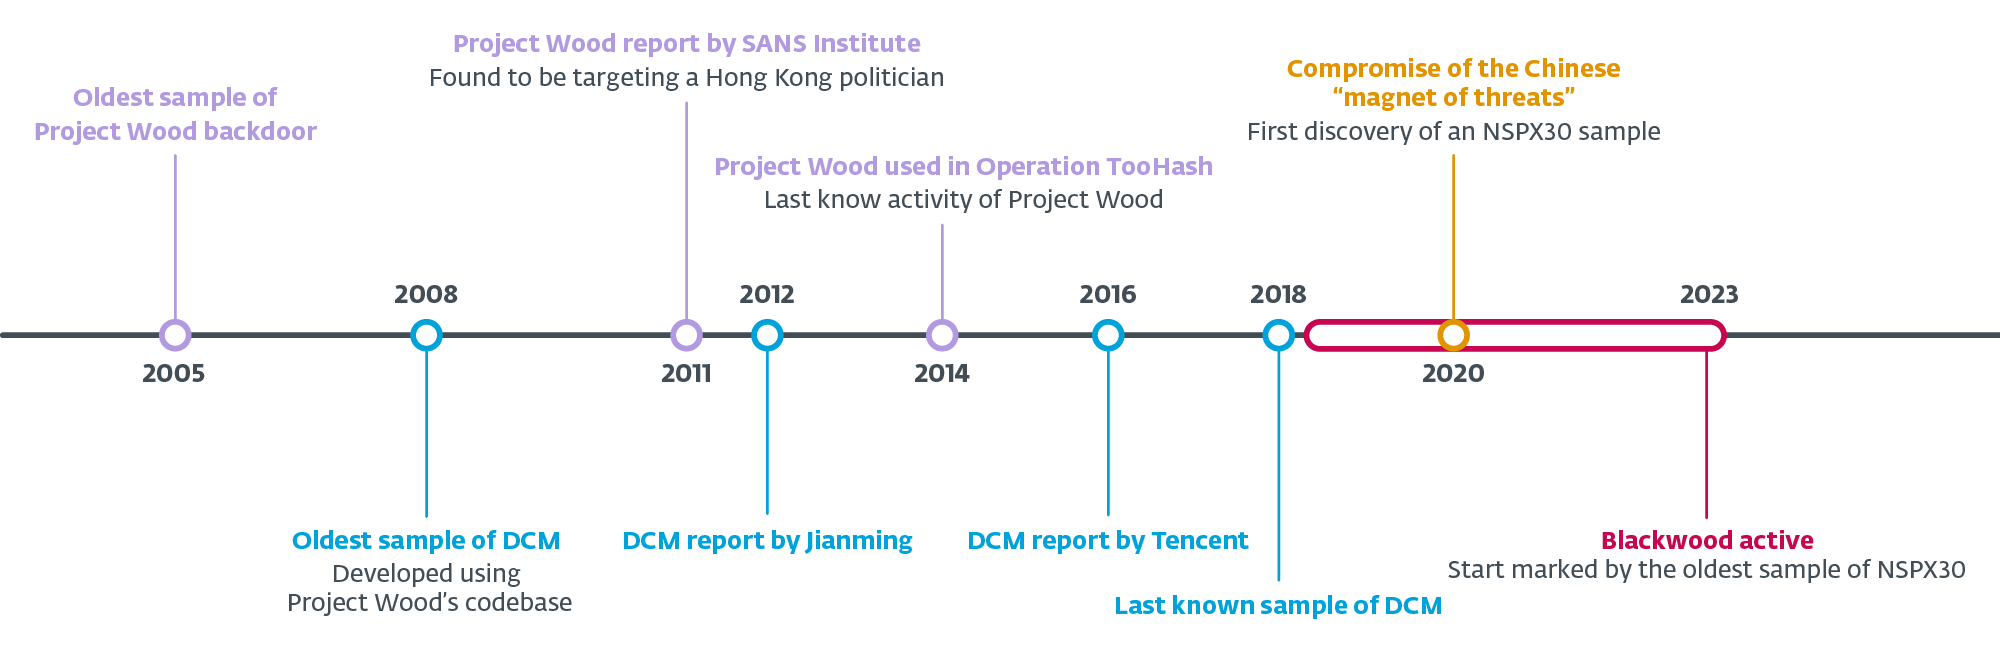 图 2. Project Wood、DCM 和 NSPX30 主要变体的时间表